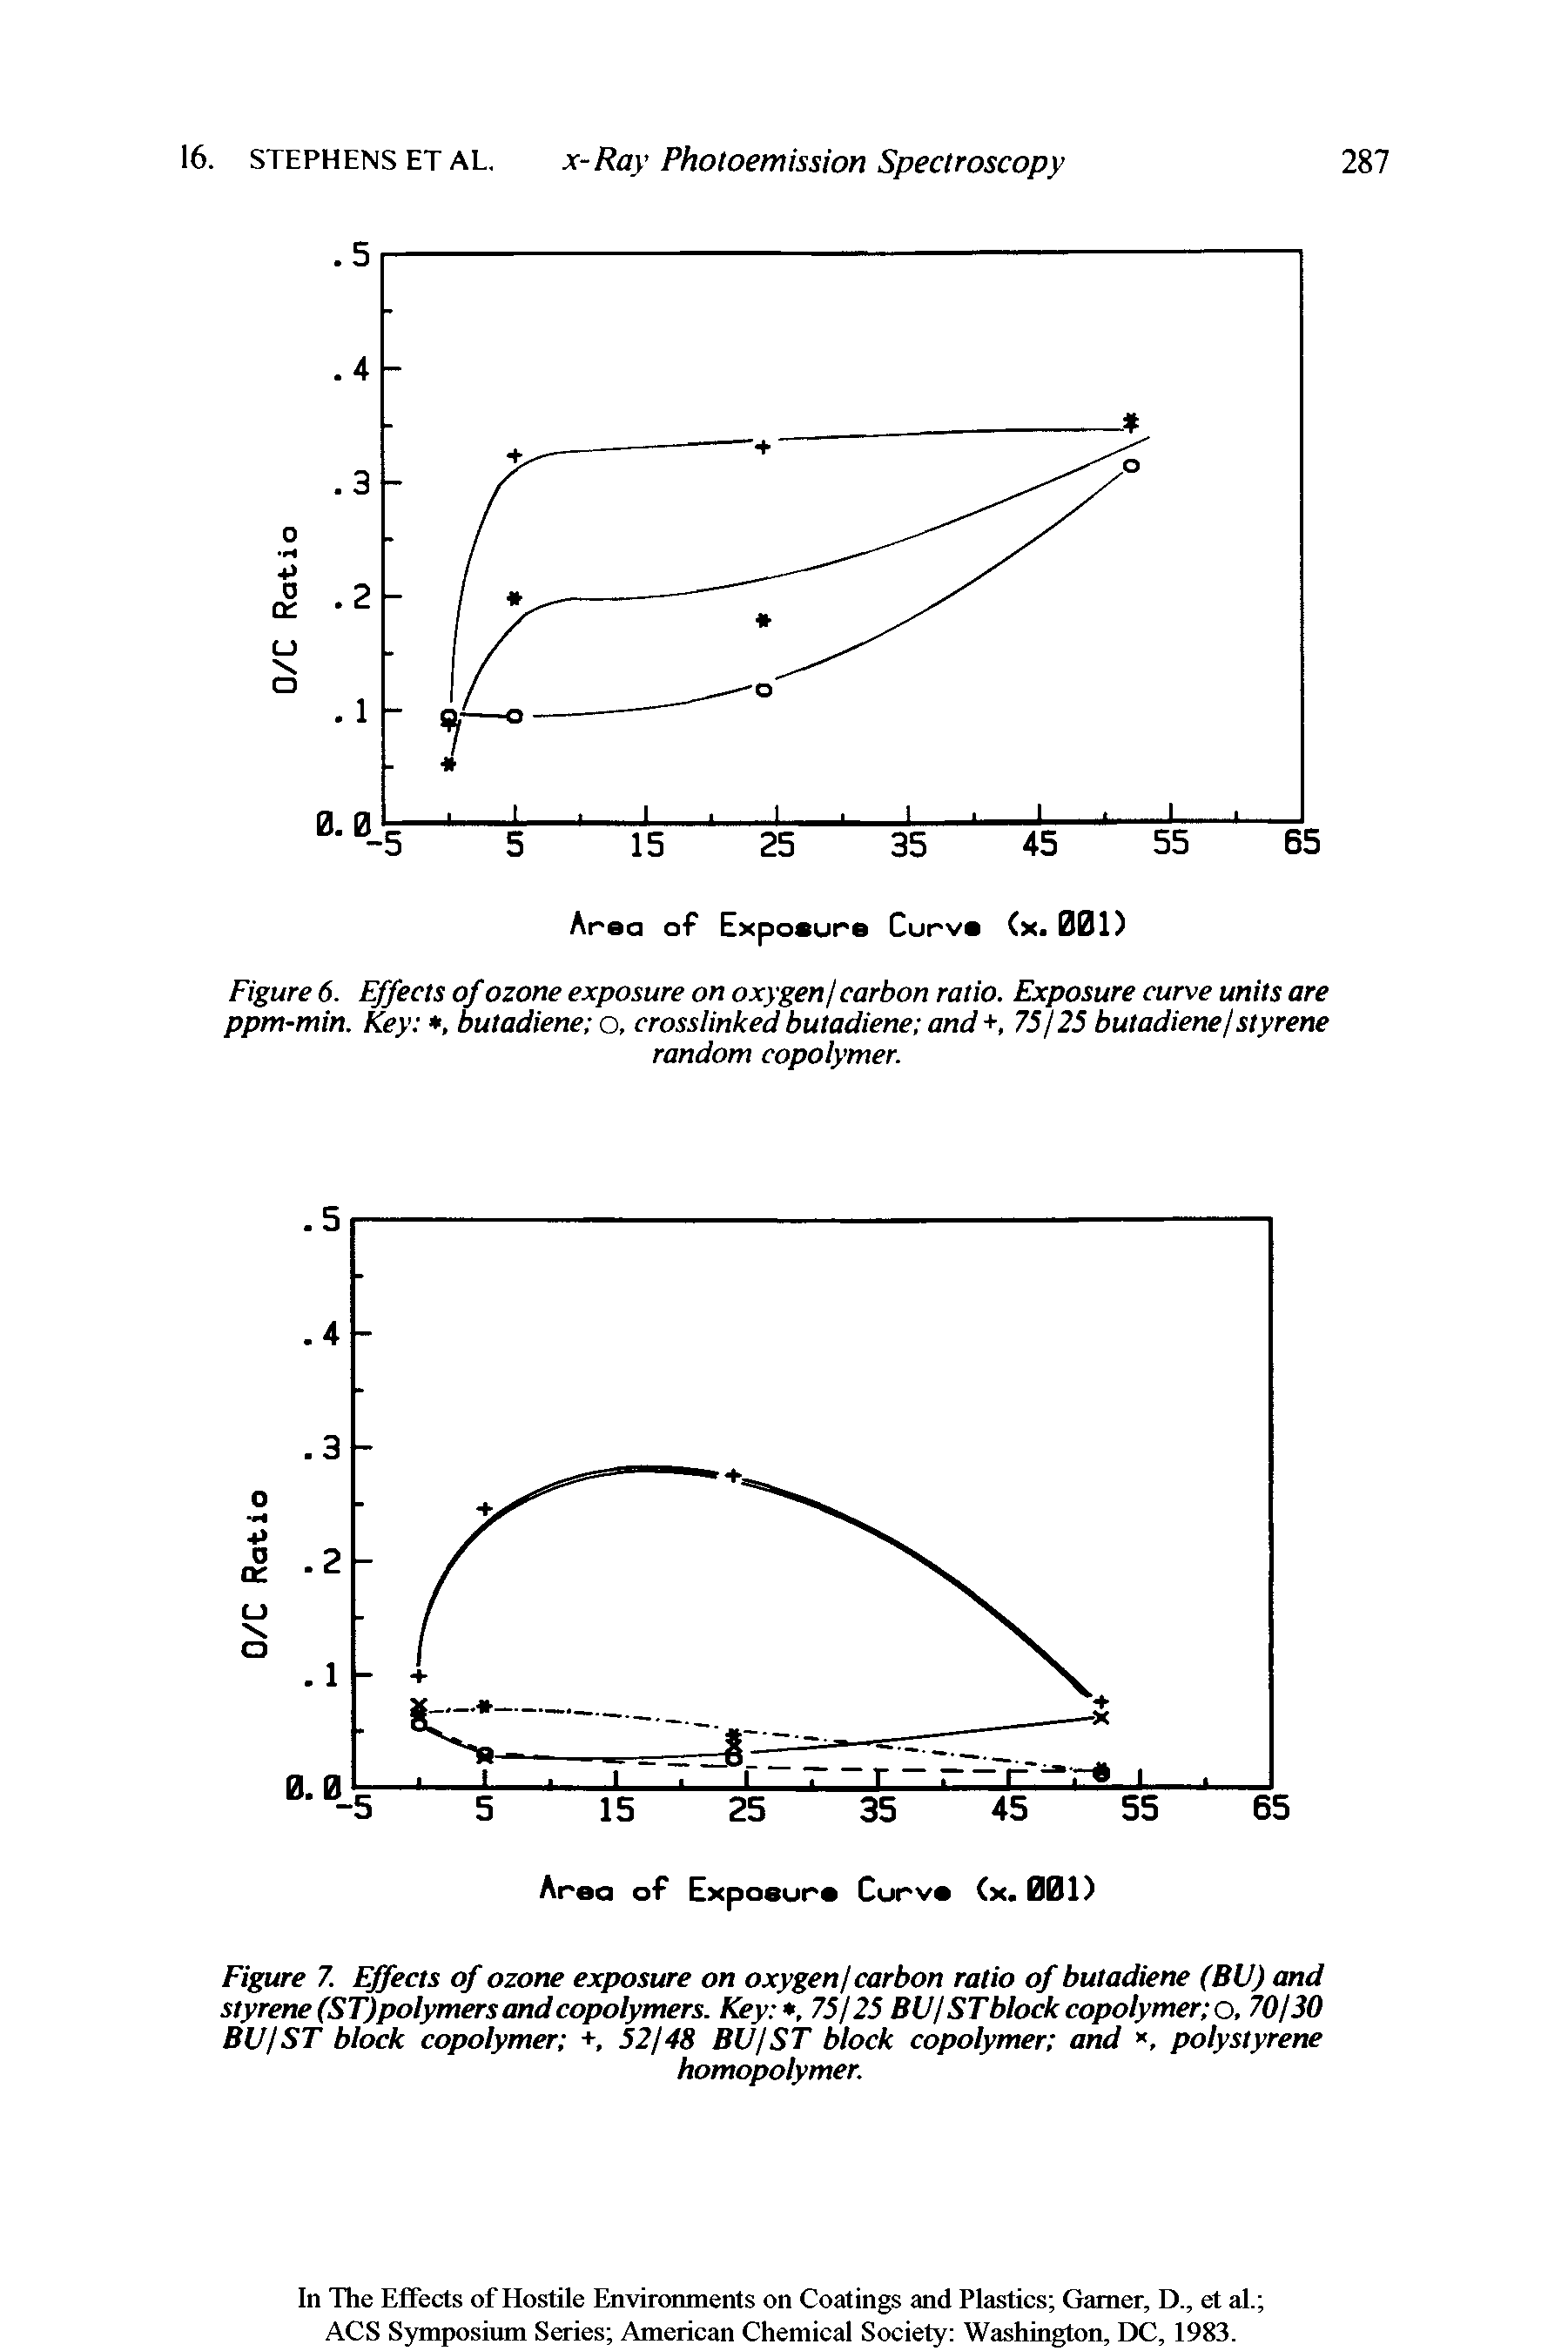 Figure 6. Effects of ozone exposure on oxygen/carbon ratio. Exposure curve units are ppm-min. Key , butadiene o, crosslinked butadiene and +, 75/25 butadiene/styrene random copolymer.